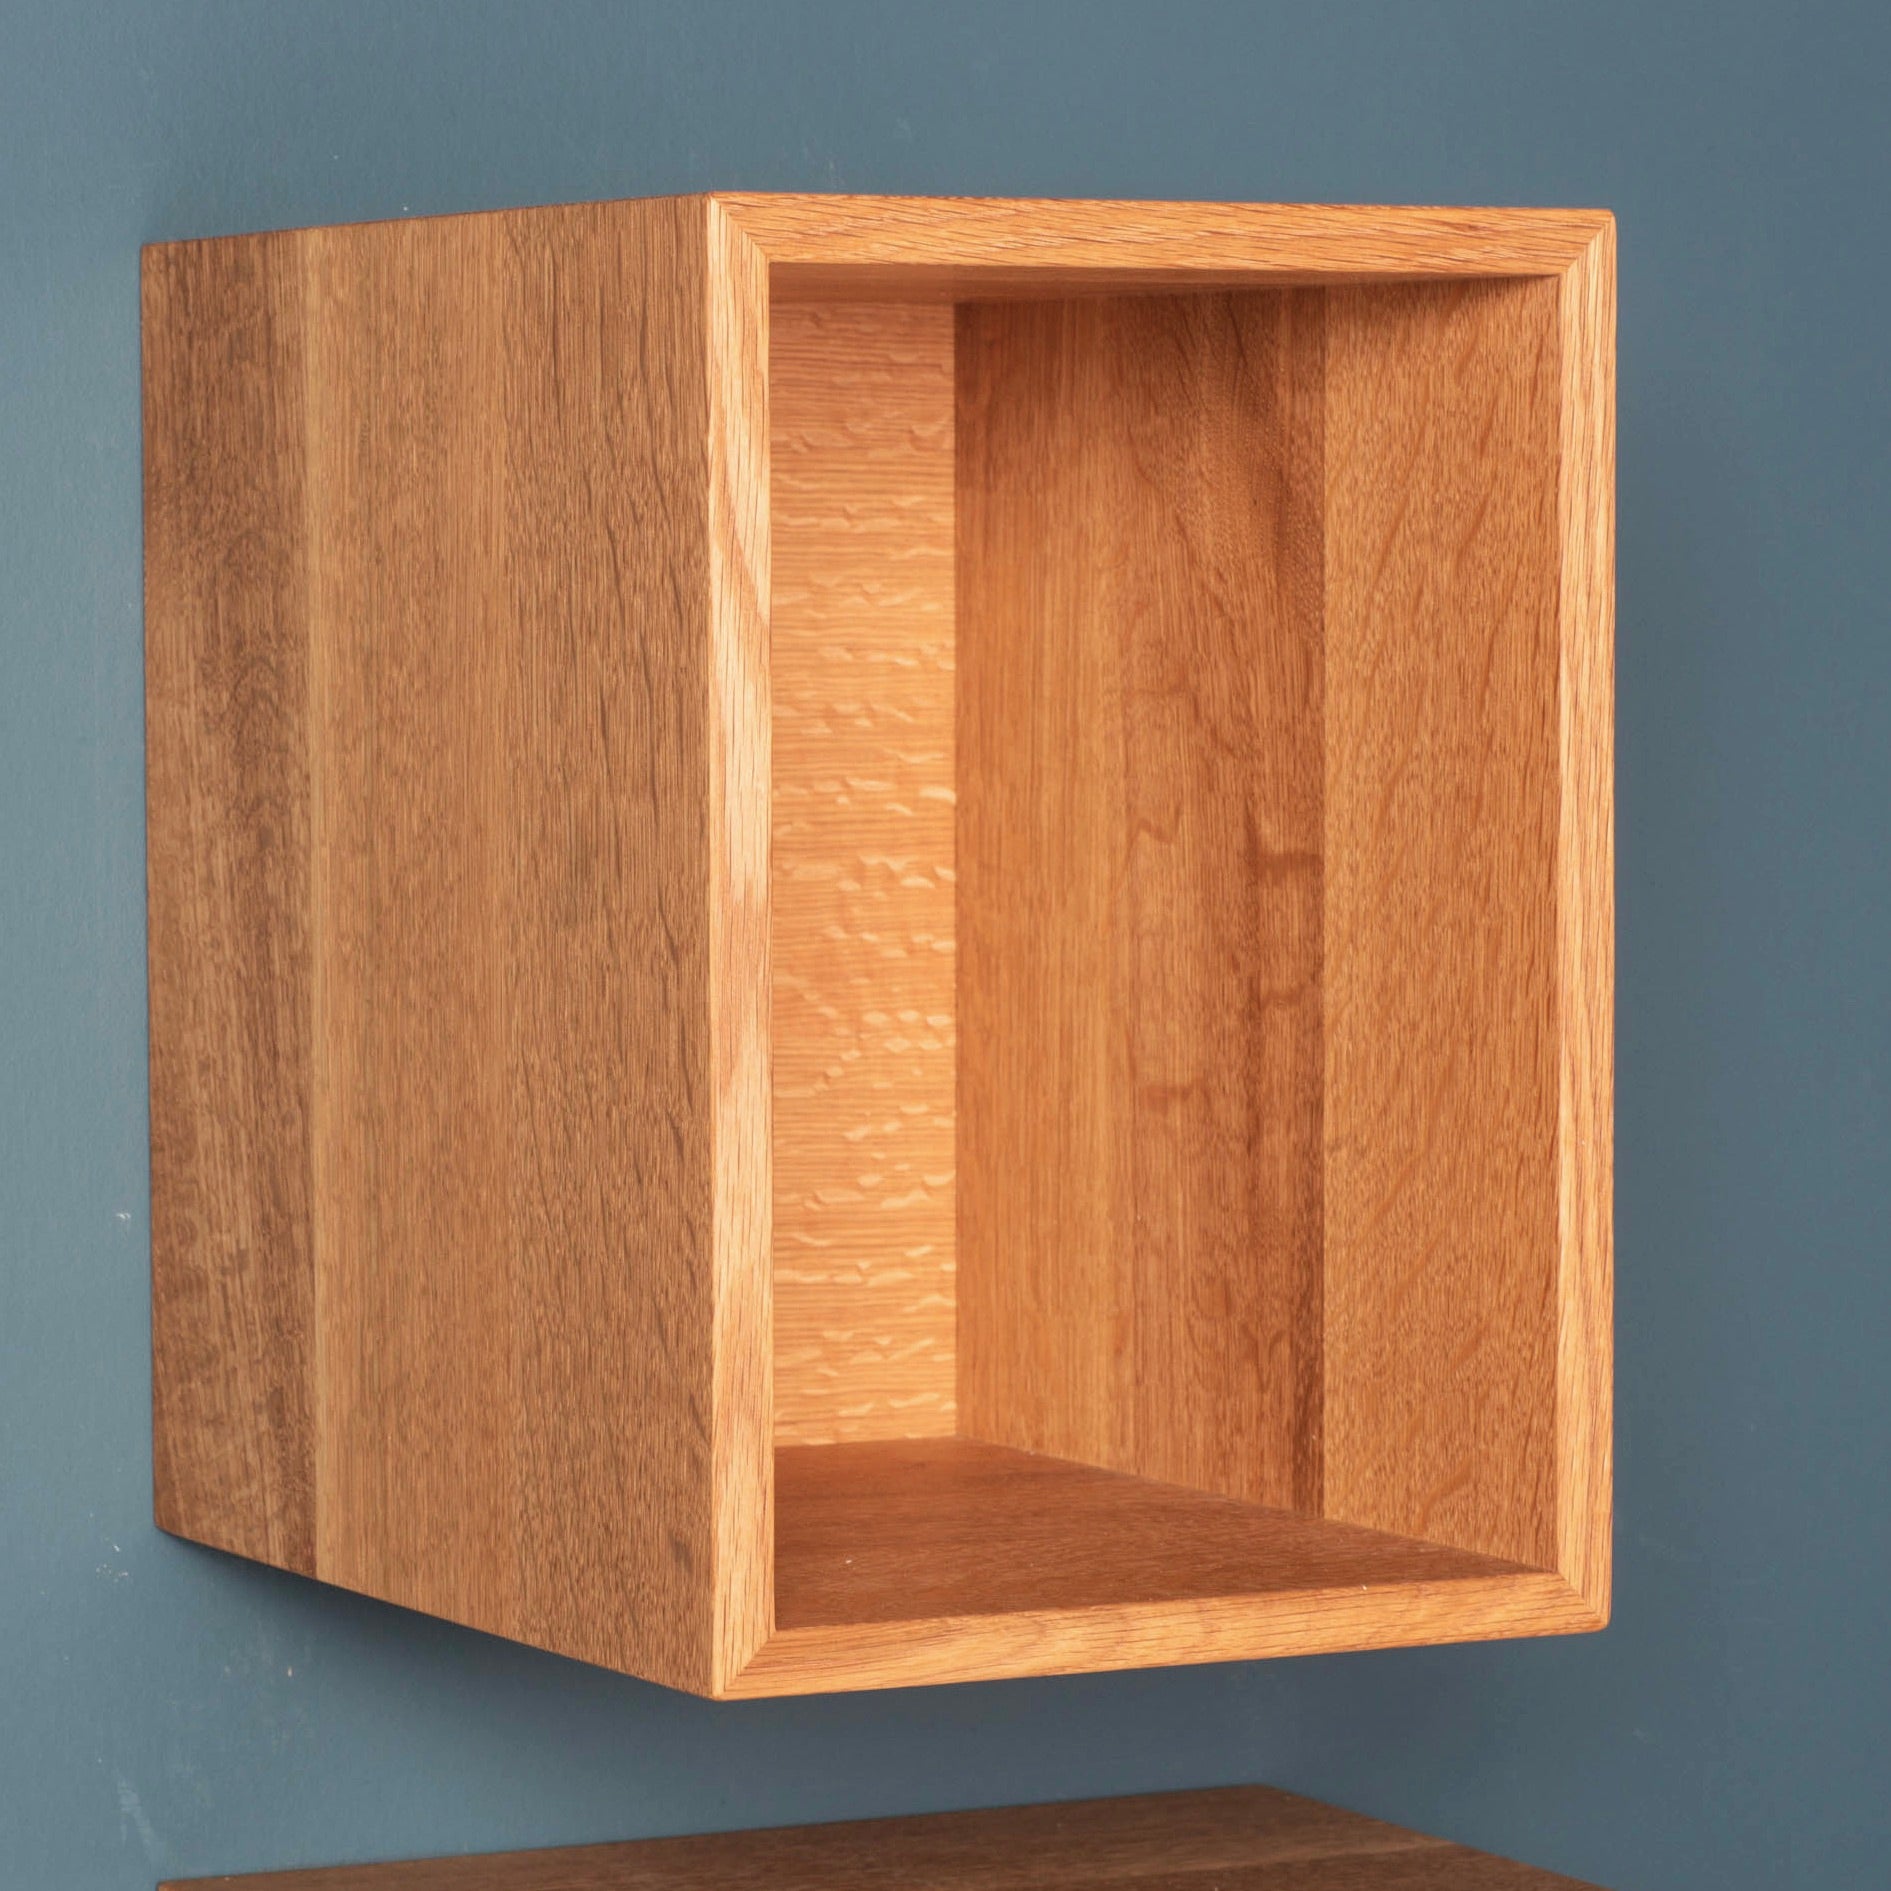 Maple Record Storage Shelves – Krovel Furniture Co.